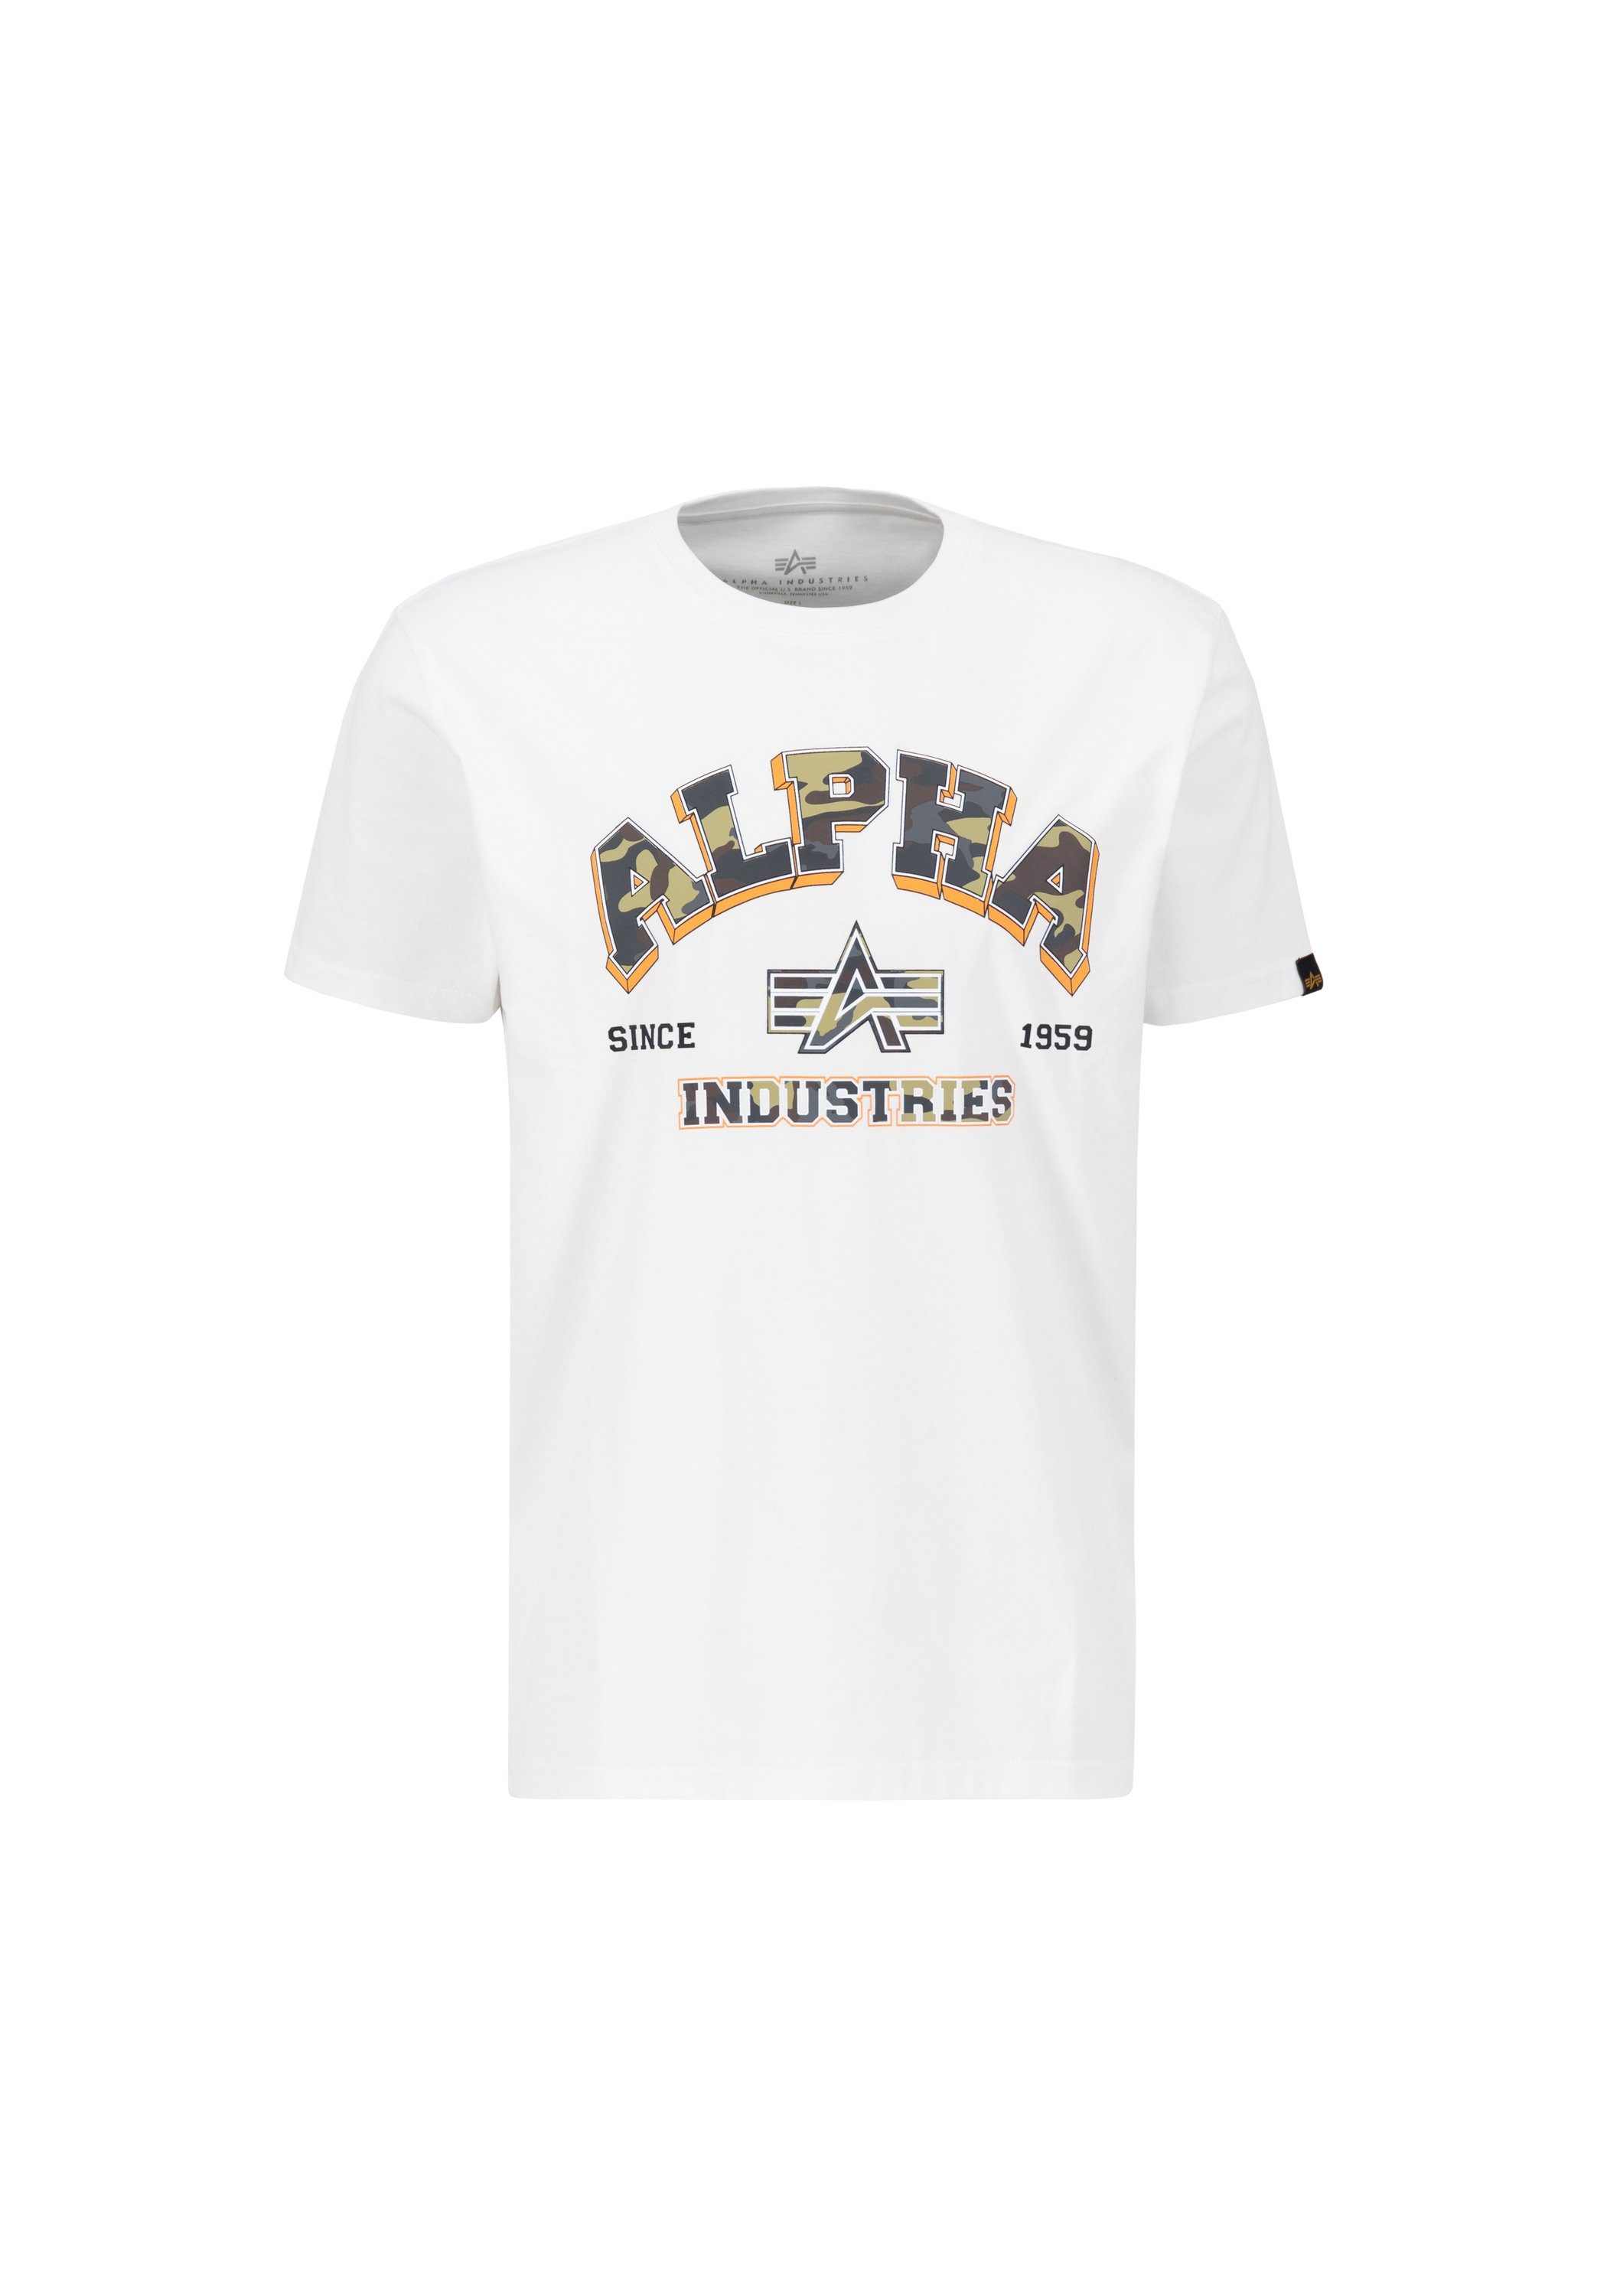 Alpha Industries T-shirt Men T-Shirts College Camo T